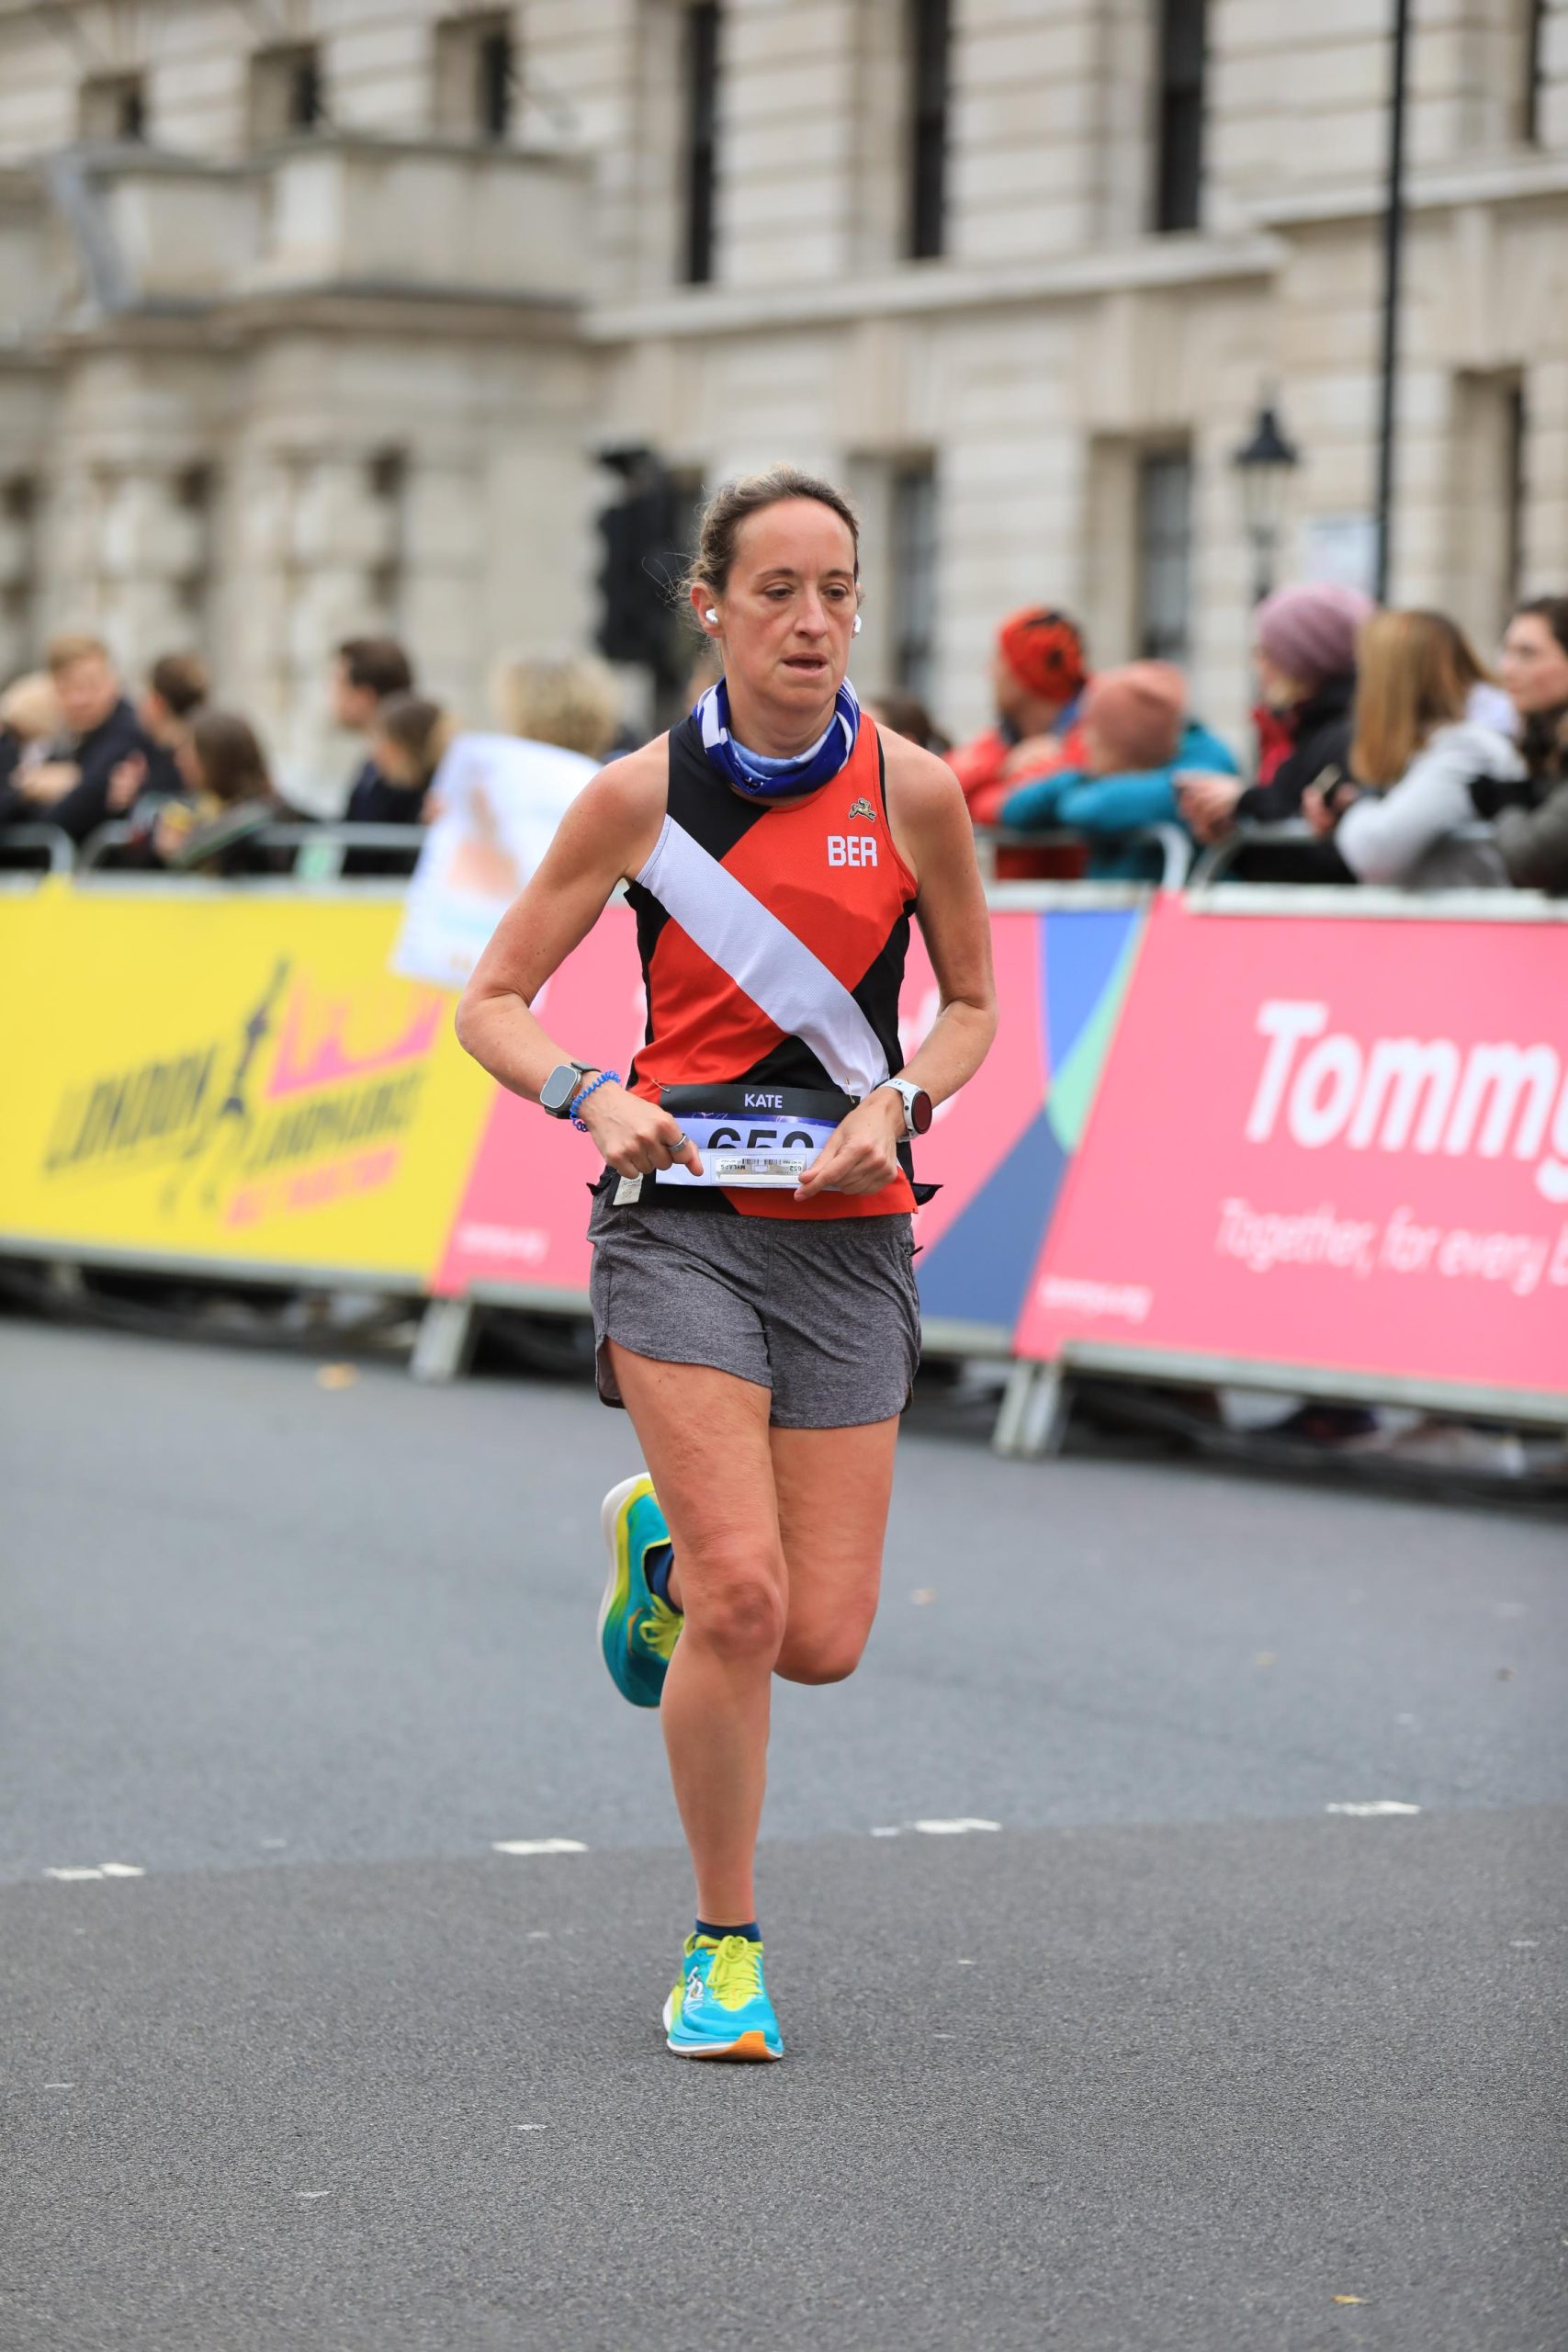 Runner's World Editor's Races Under Scrutiny - MarathonInvestigation